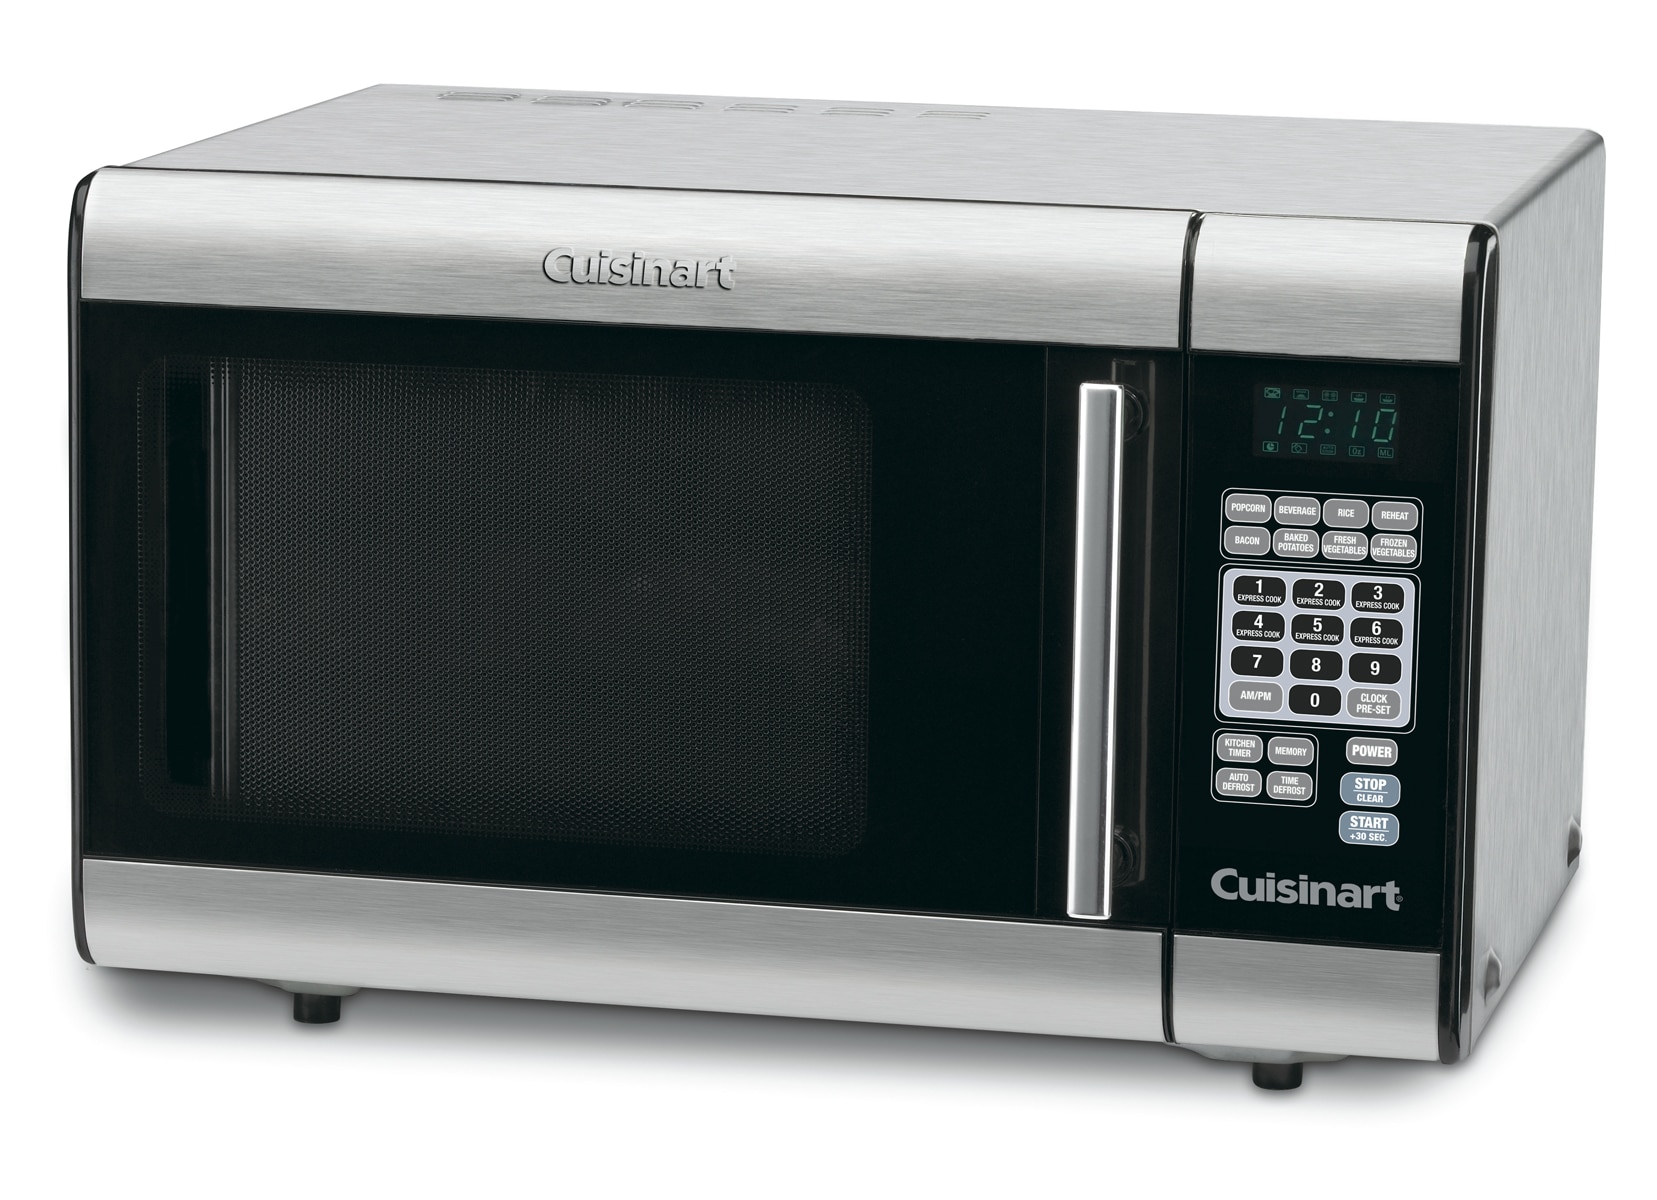 Cuisinart 700-Watt Stainless Steel Microwave Oven